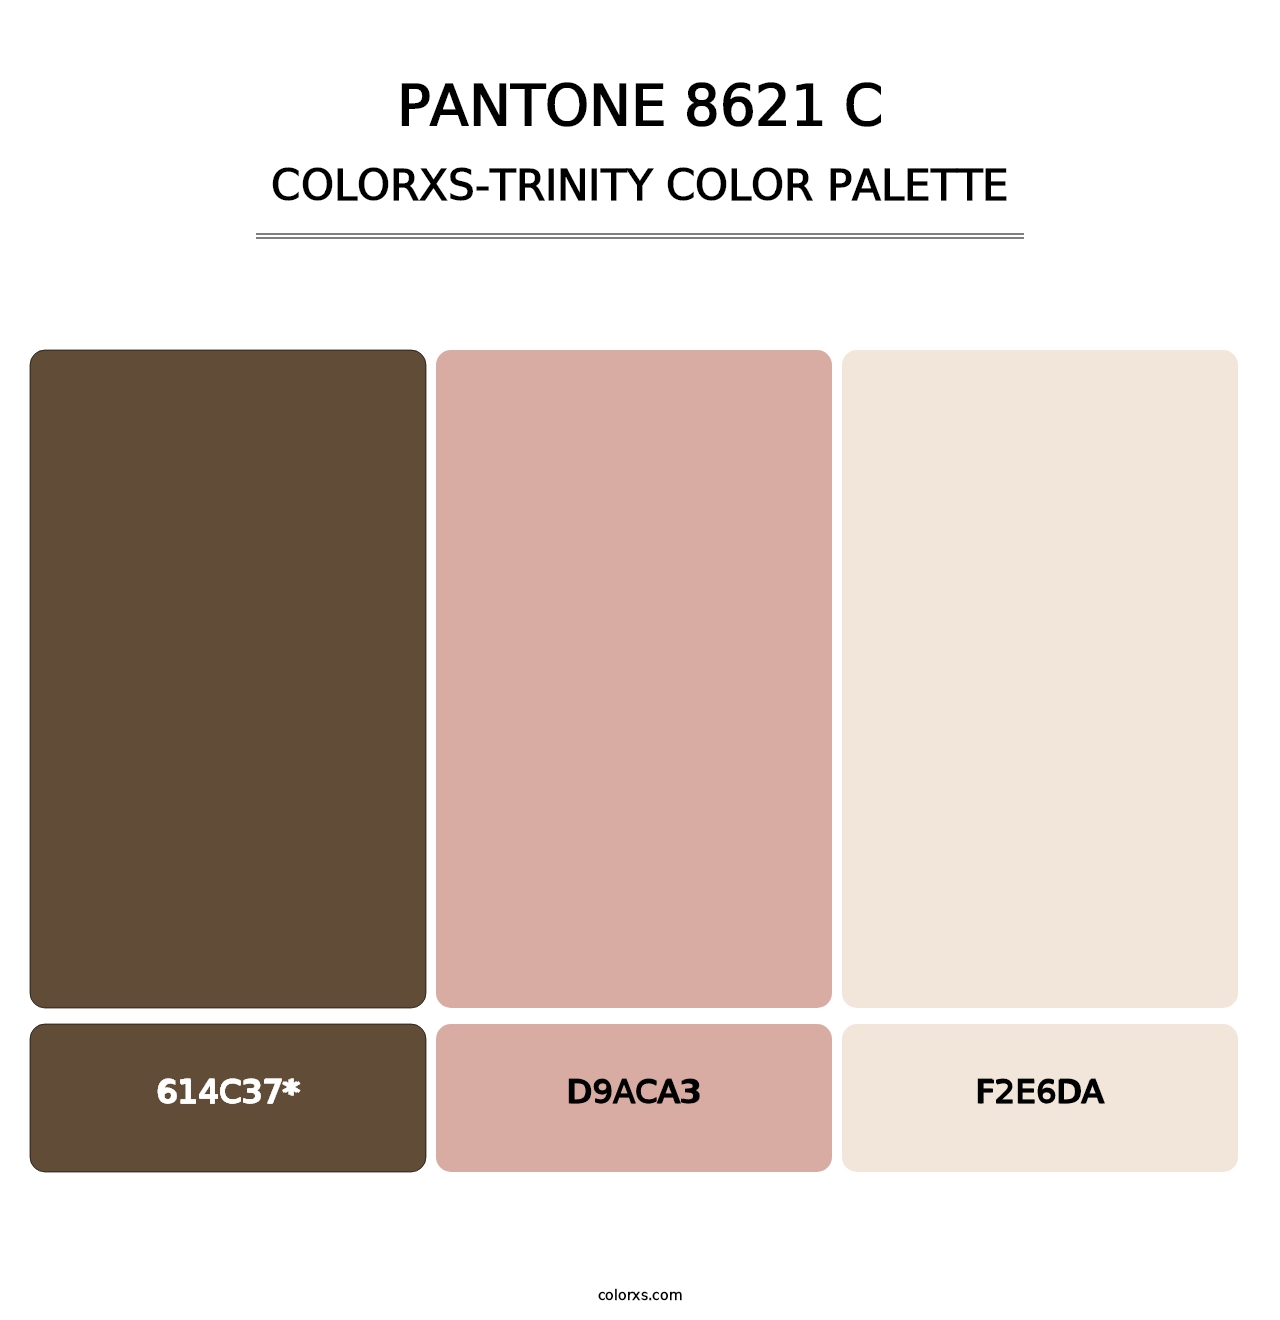 PANTONE 8621 C - Colorxs Trinity Palette